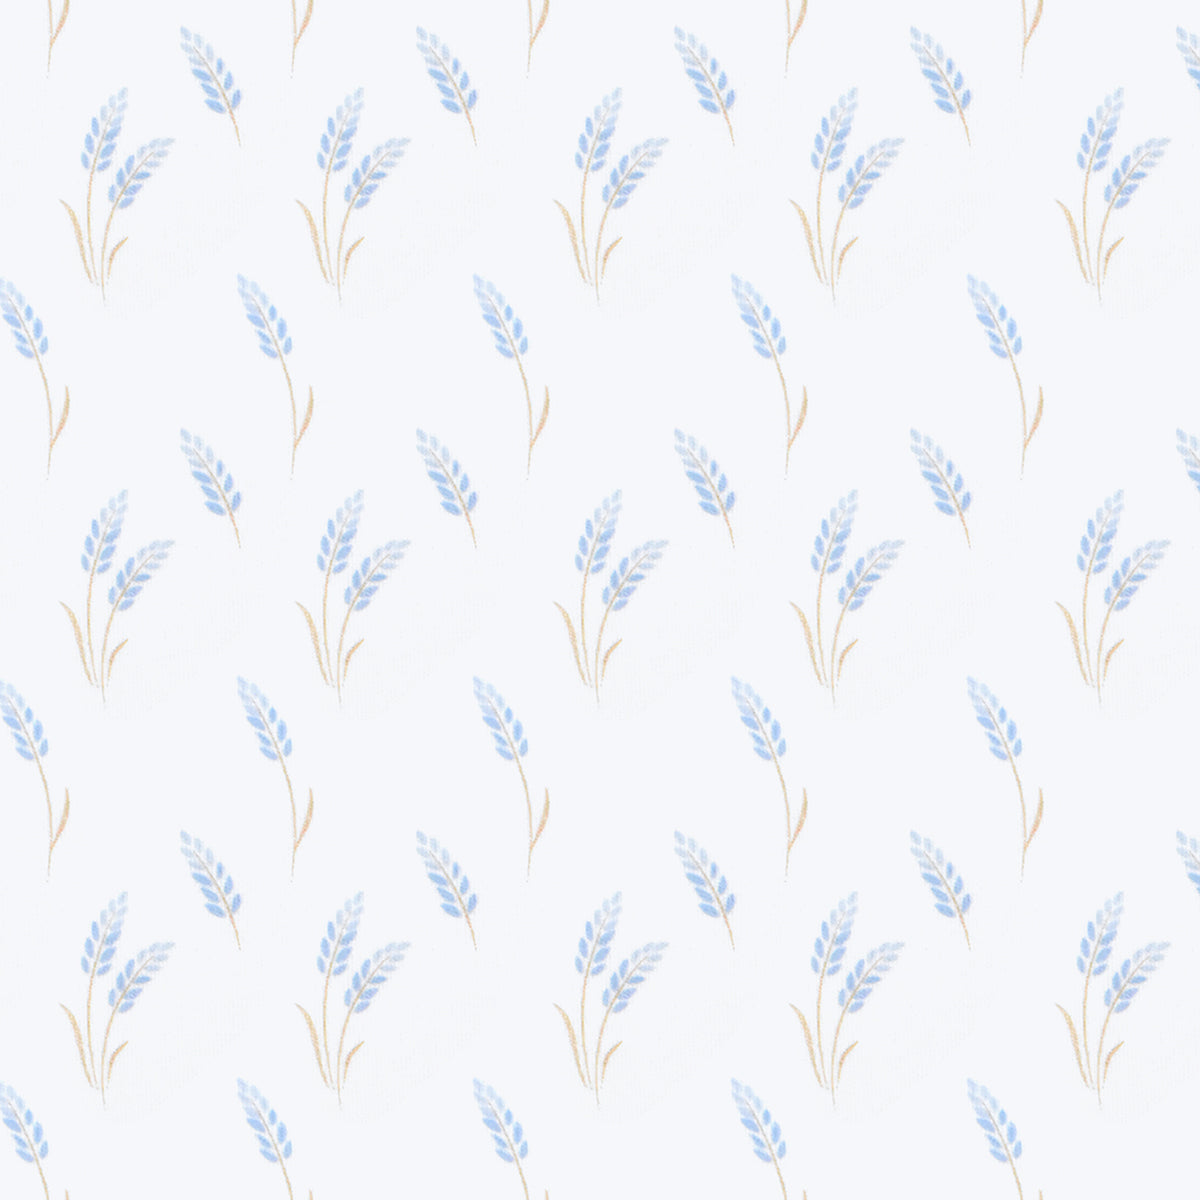 Wheat Spikes Printed Zipper Footie  |  Baby Boy